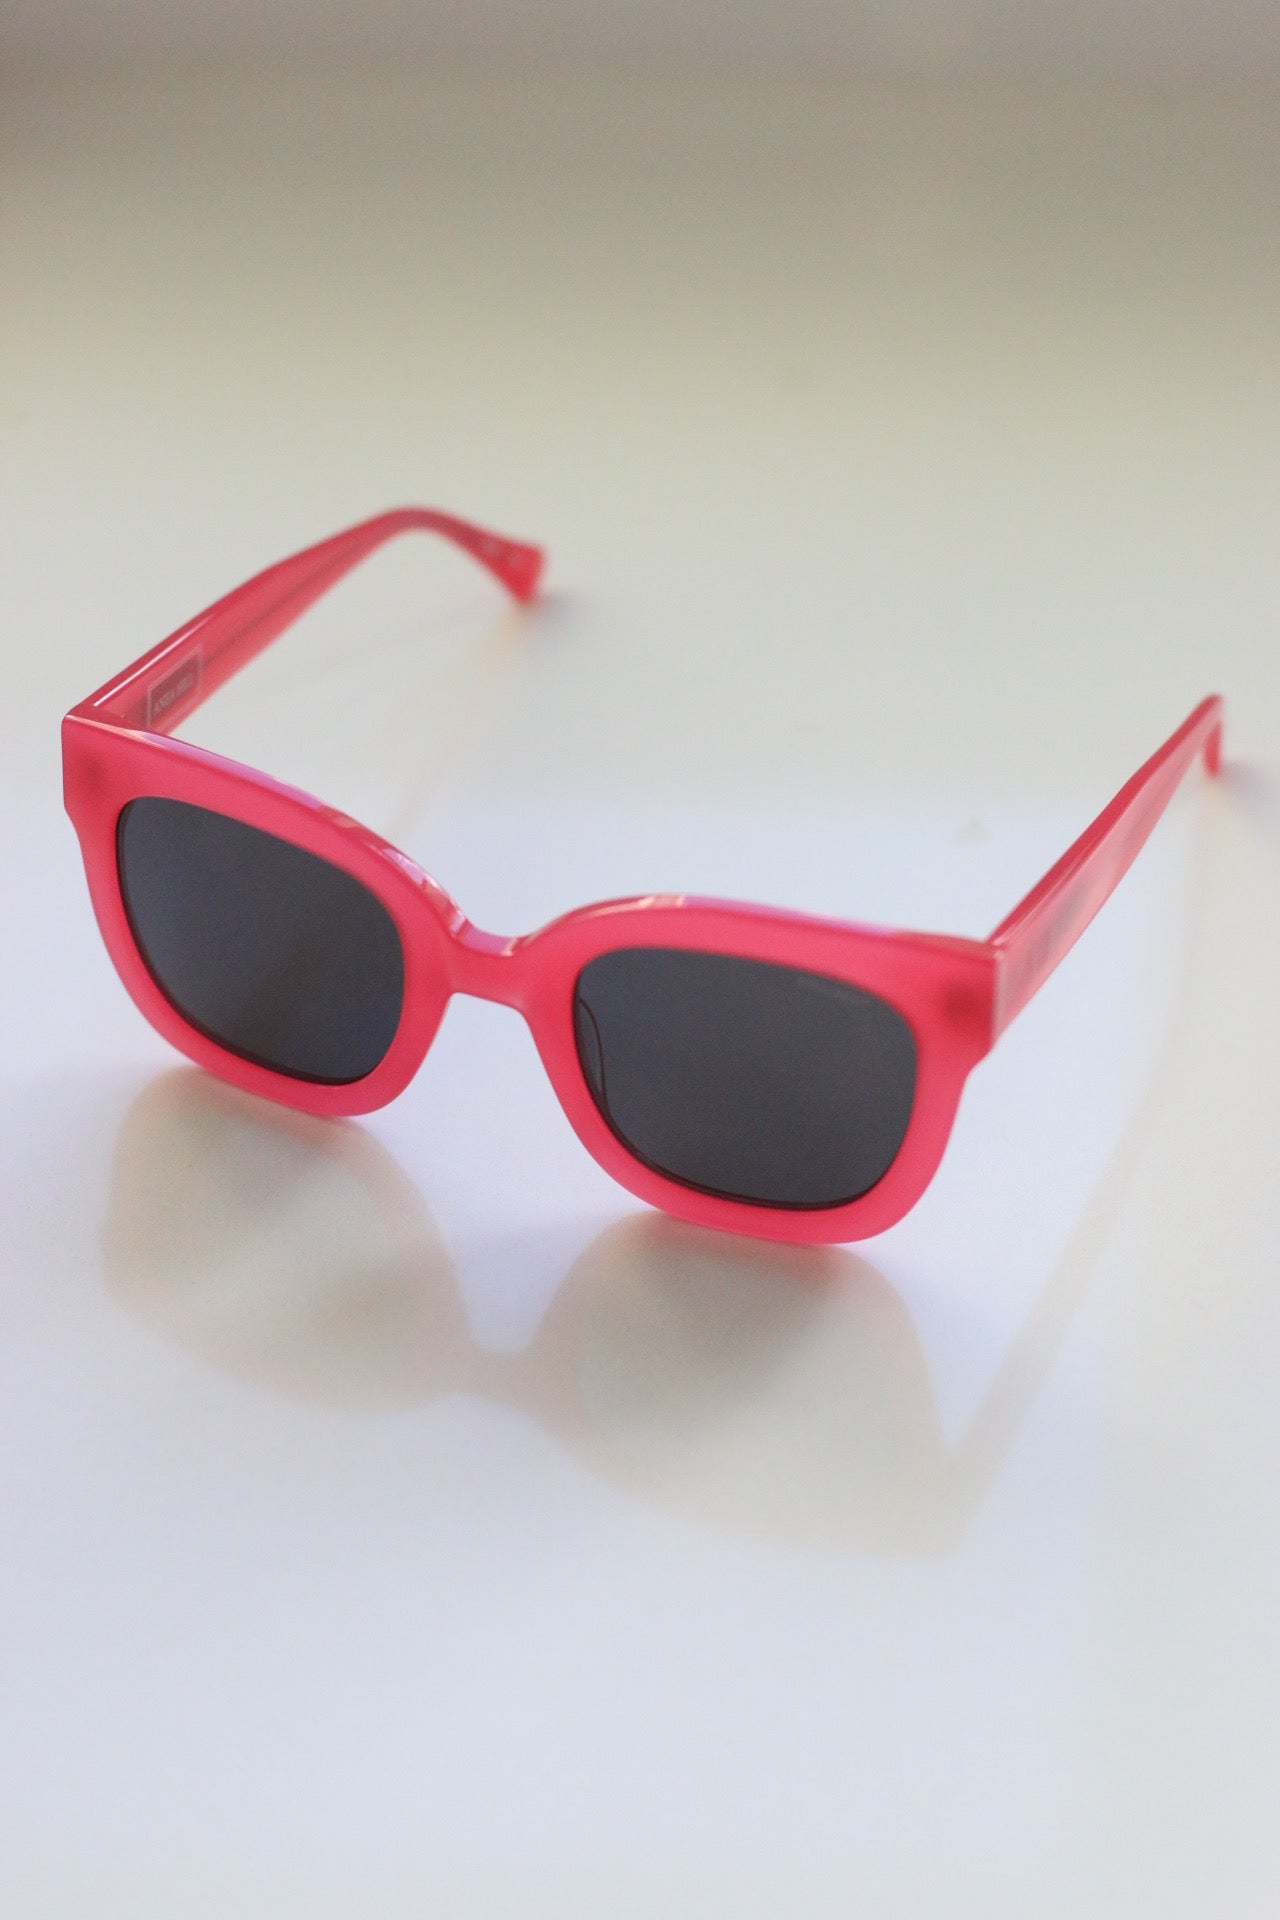 Sundown Pink Sunglasses - Vibrant pink shades reminiscent of a Texan sunset.